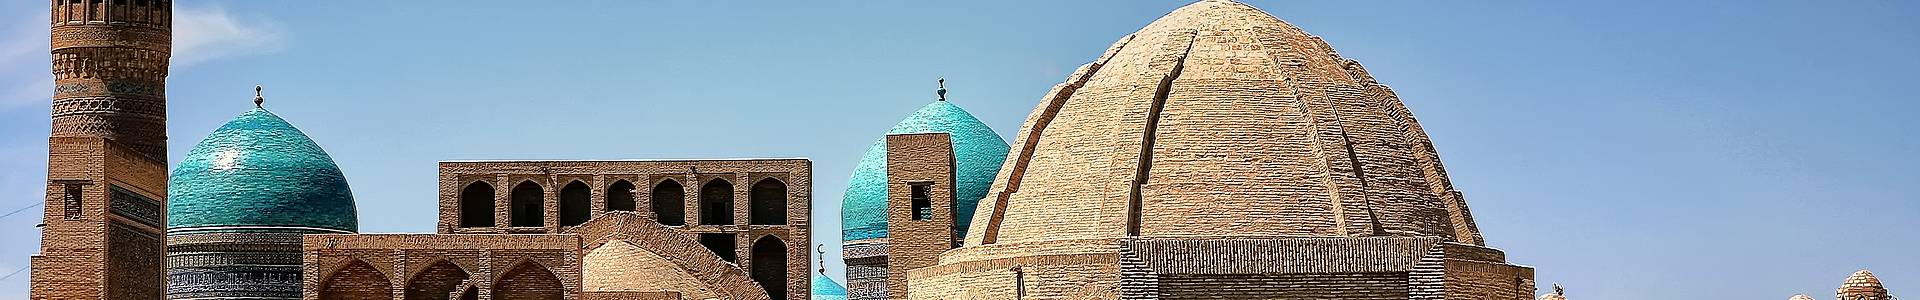 Ouzbékistan